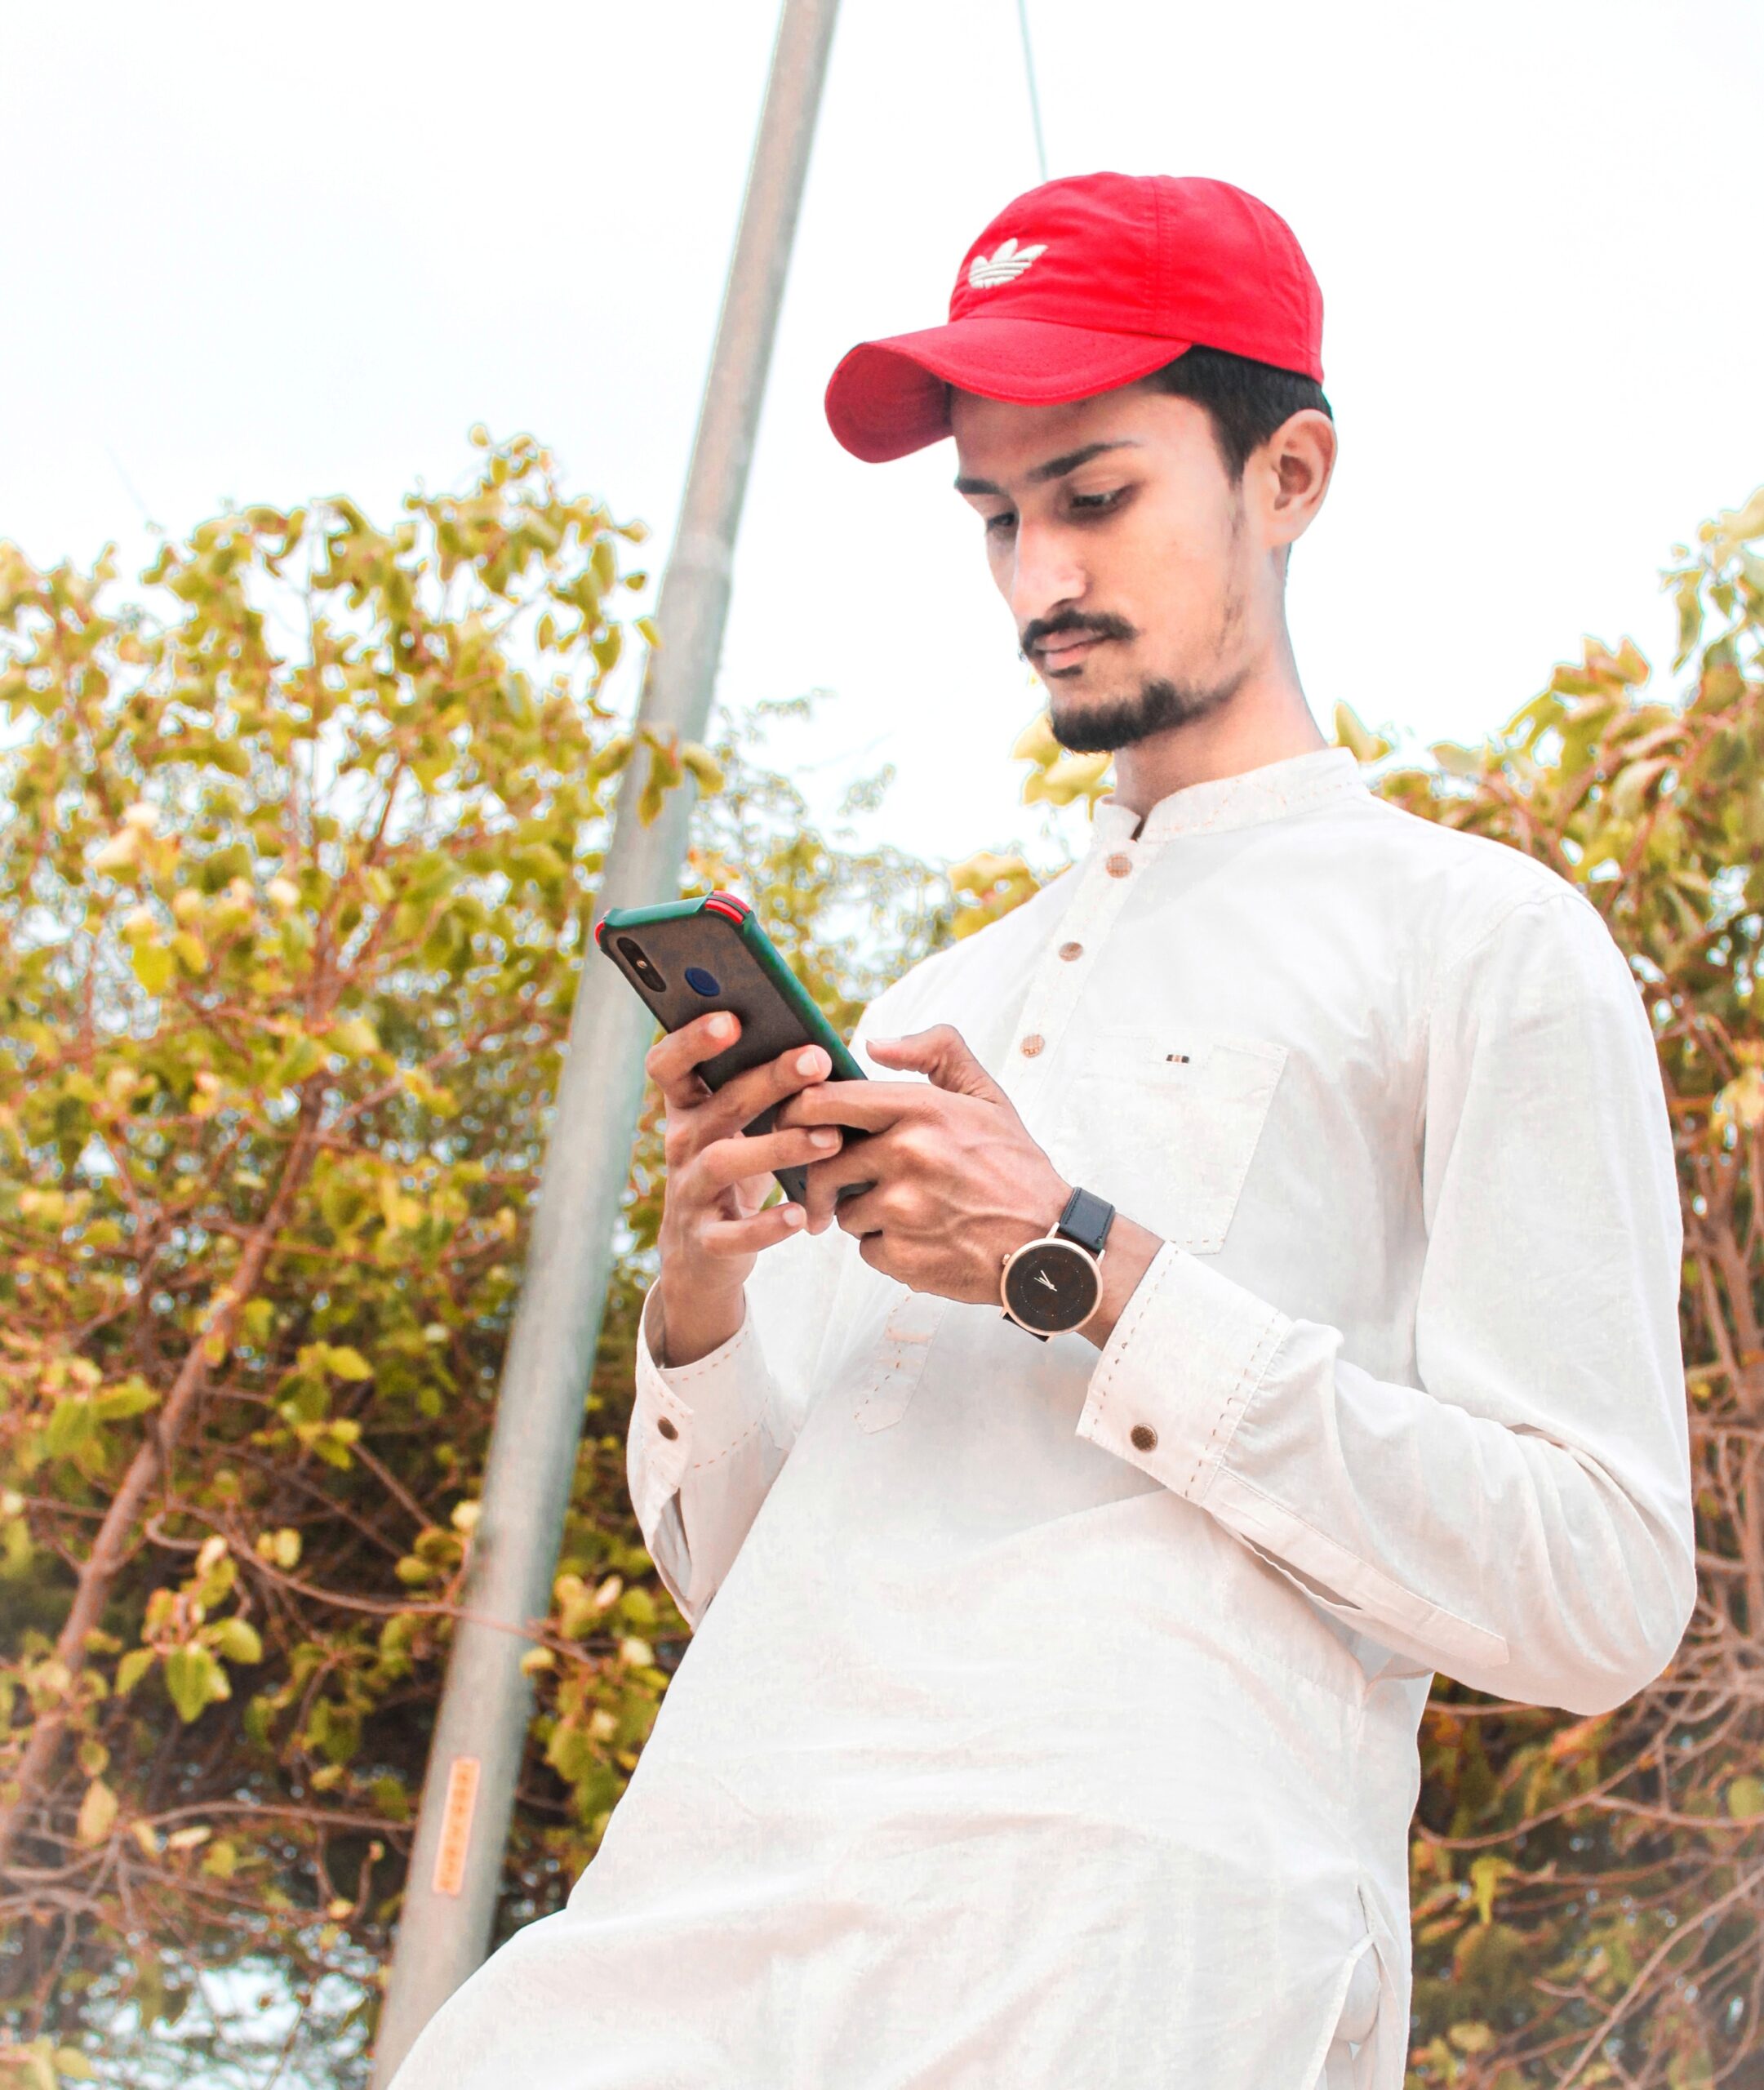 The Journey of Shakir Durrani: Fastest growing entrepreneur